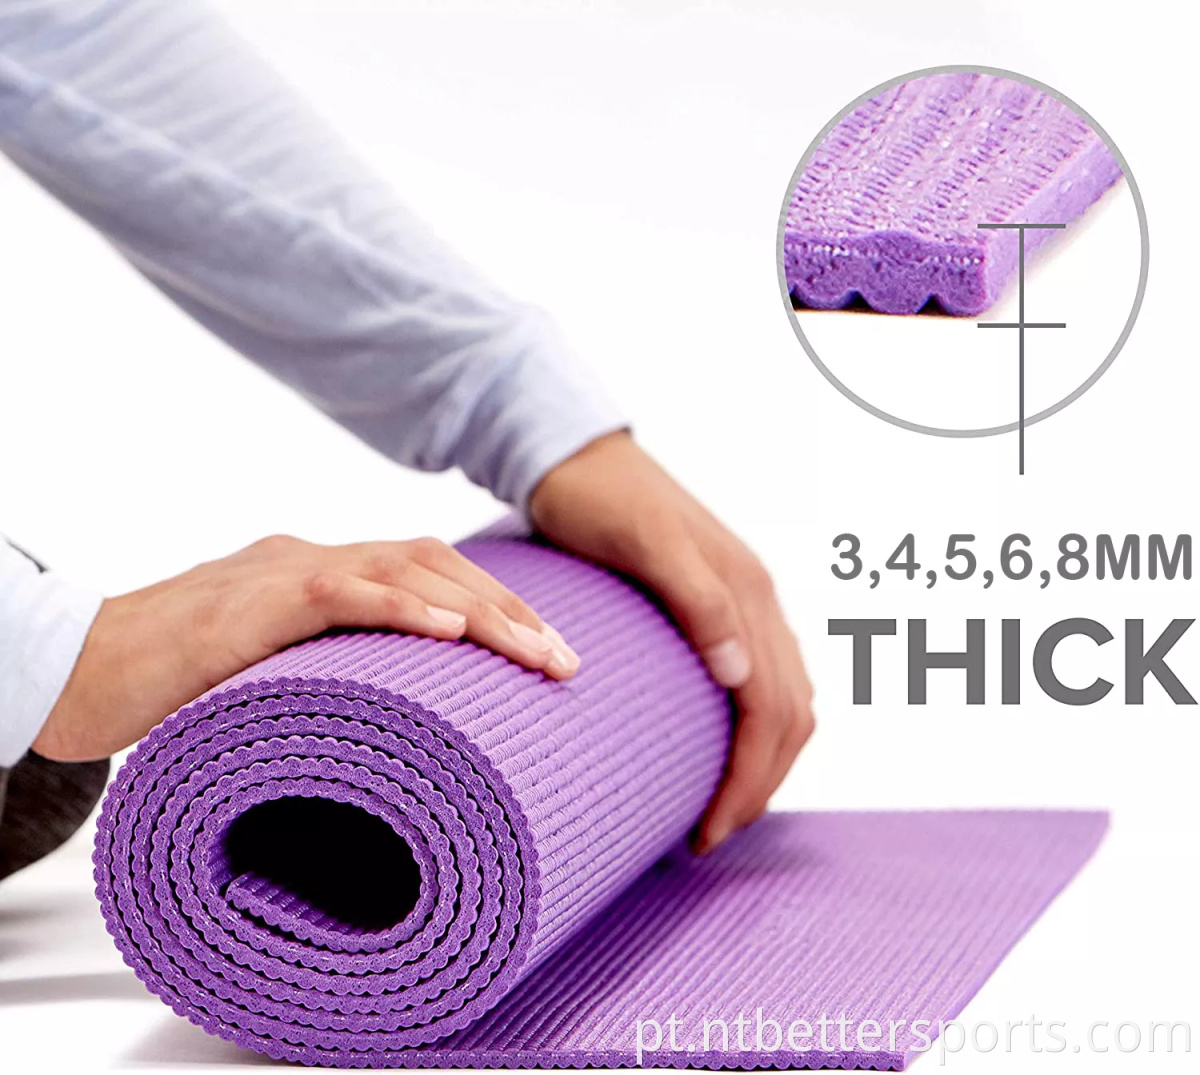 thick yoga mat